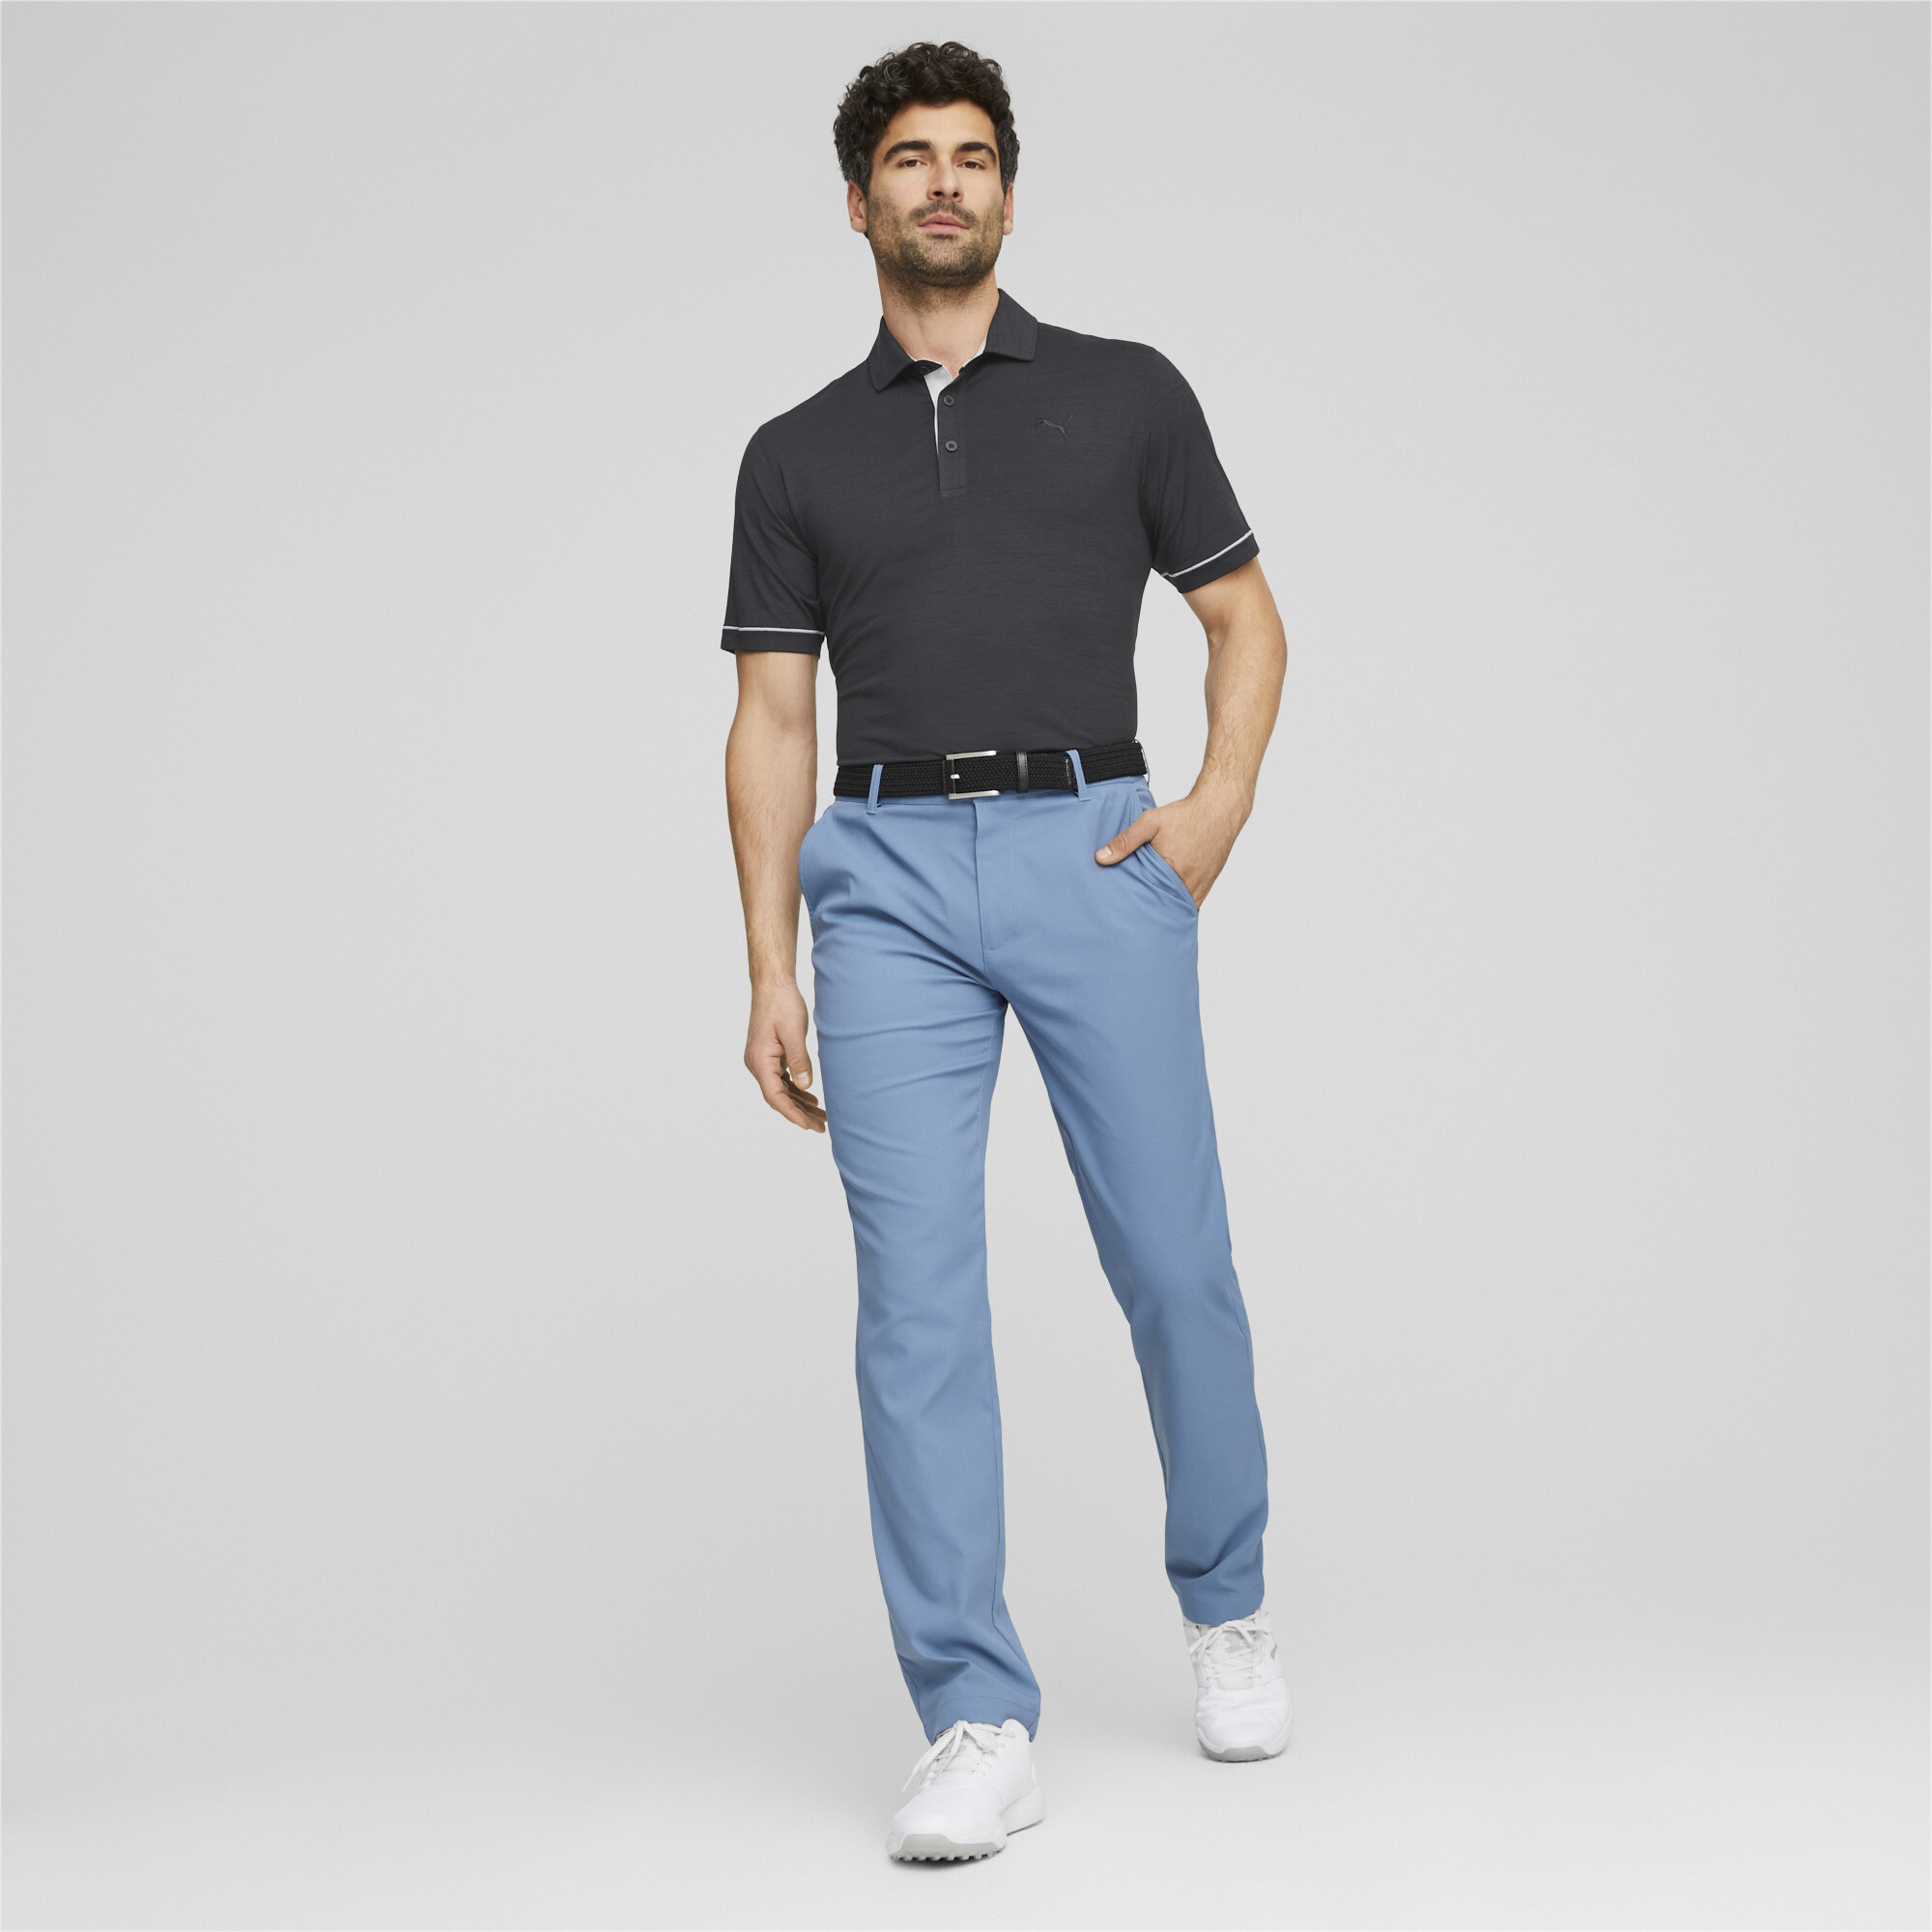 Men's Puma Cloudspun Haystack Golf Polo Shirt T-Shirt, Black T-Shirt, Size XL T-Shirt, Clothing